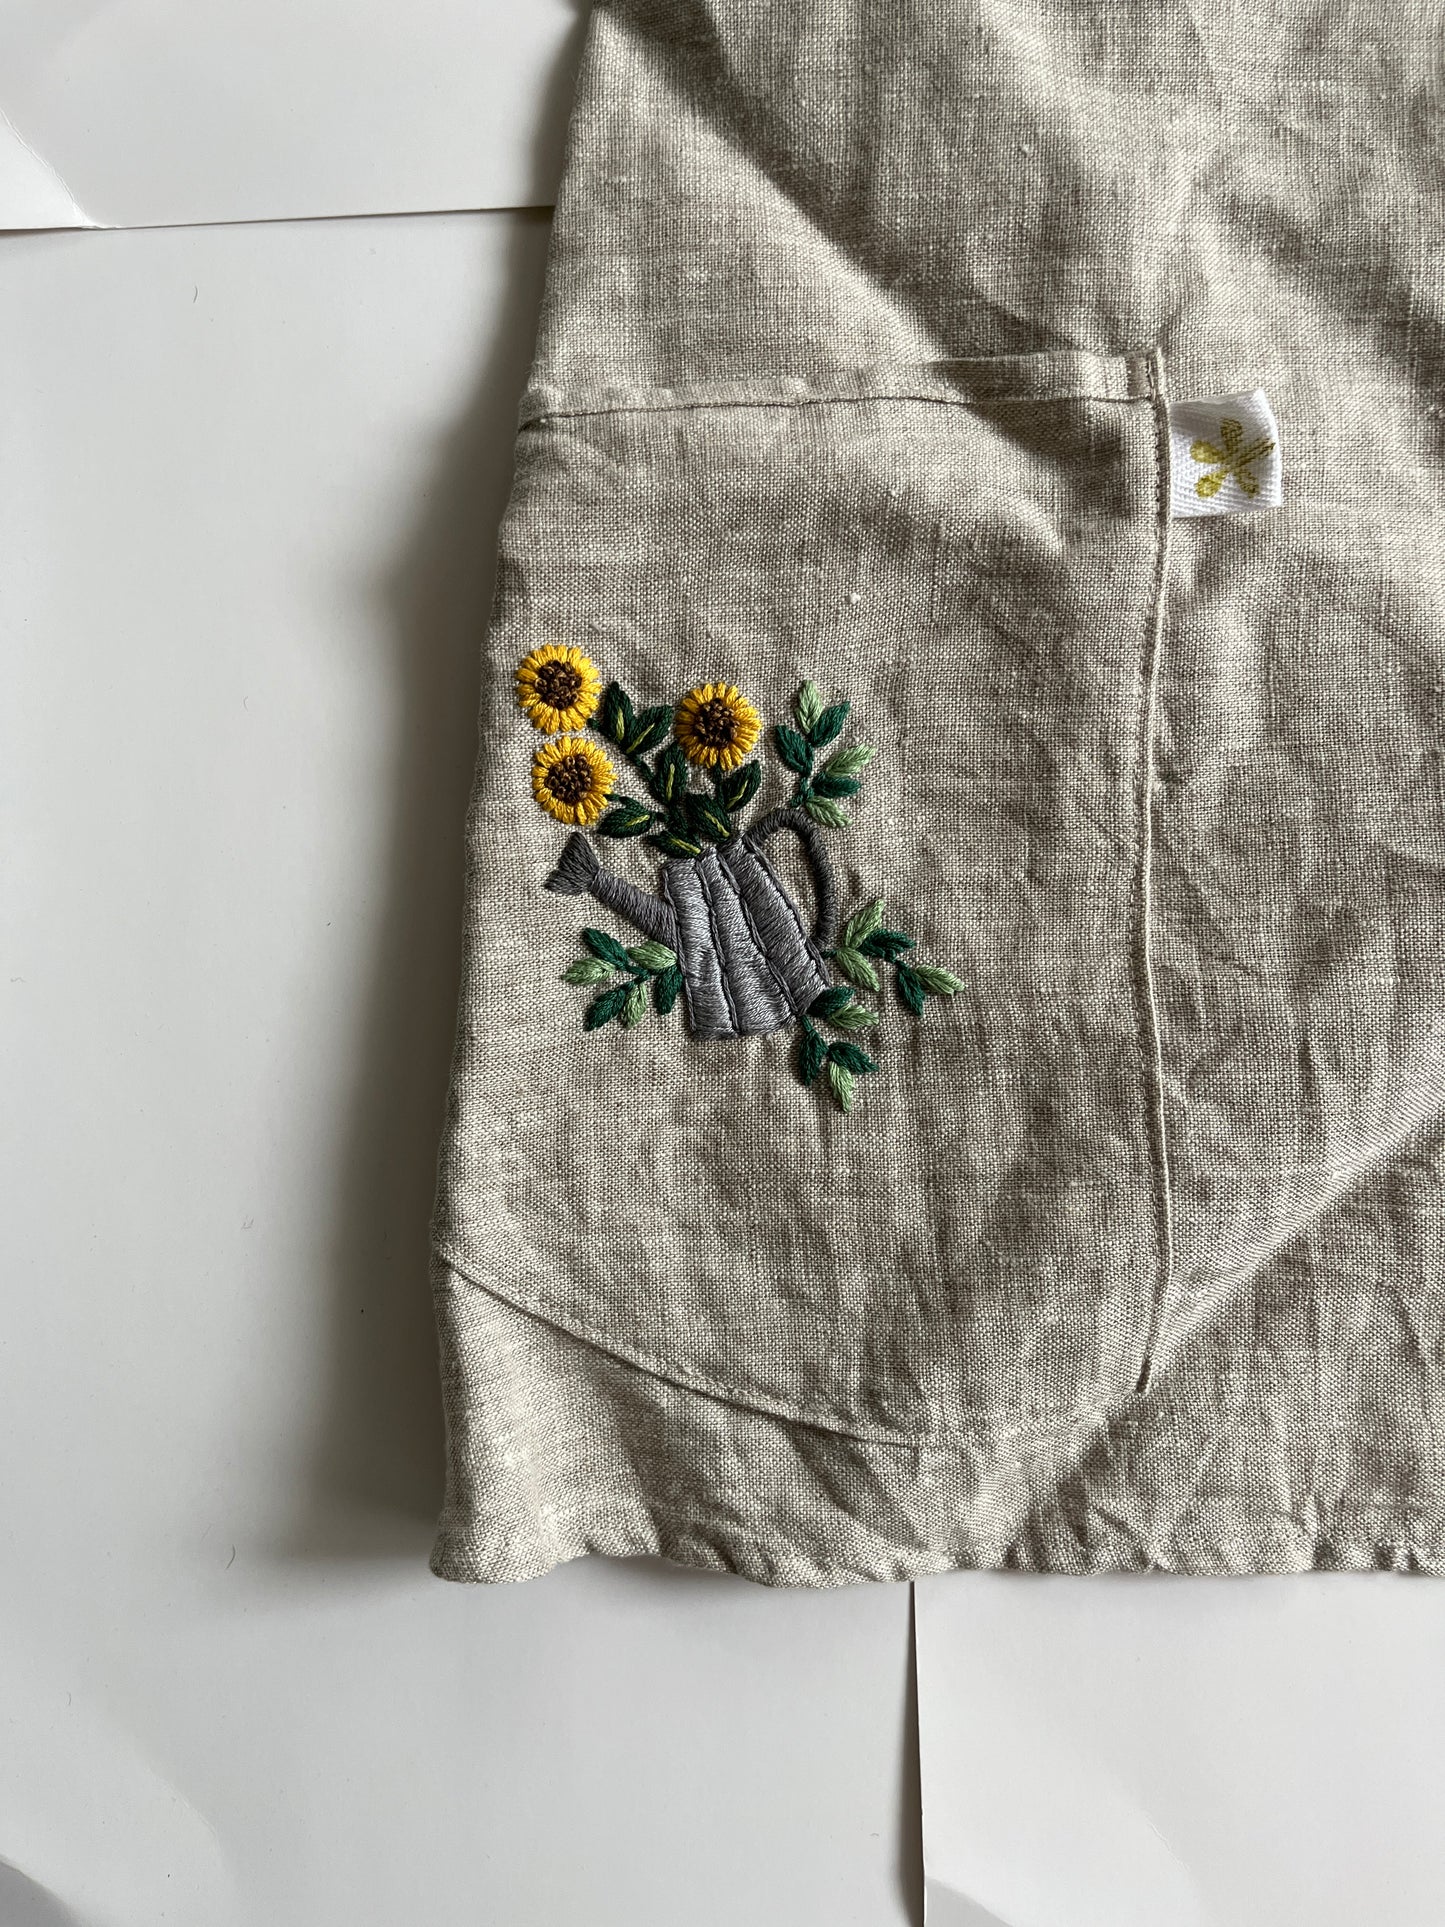 One-Size handmade linen gardening apron